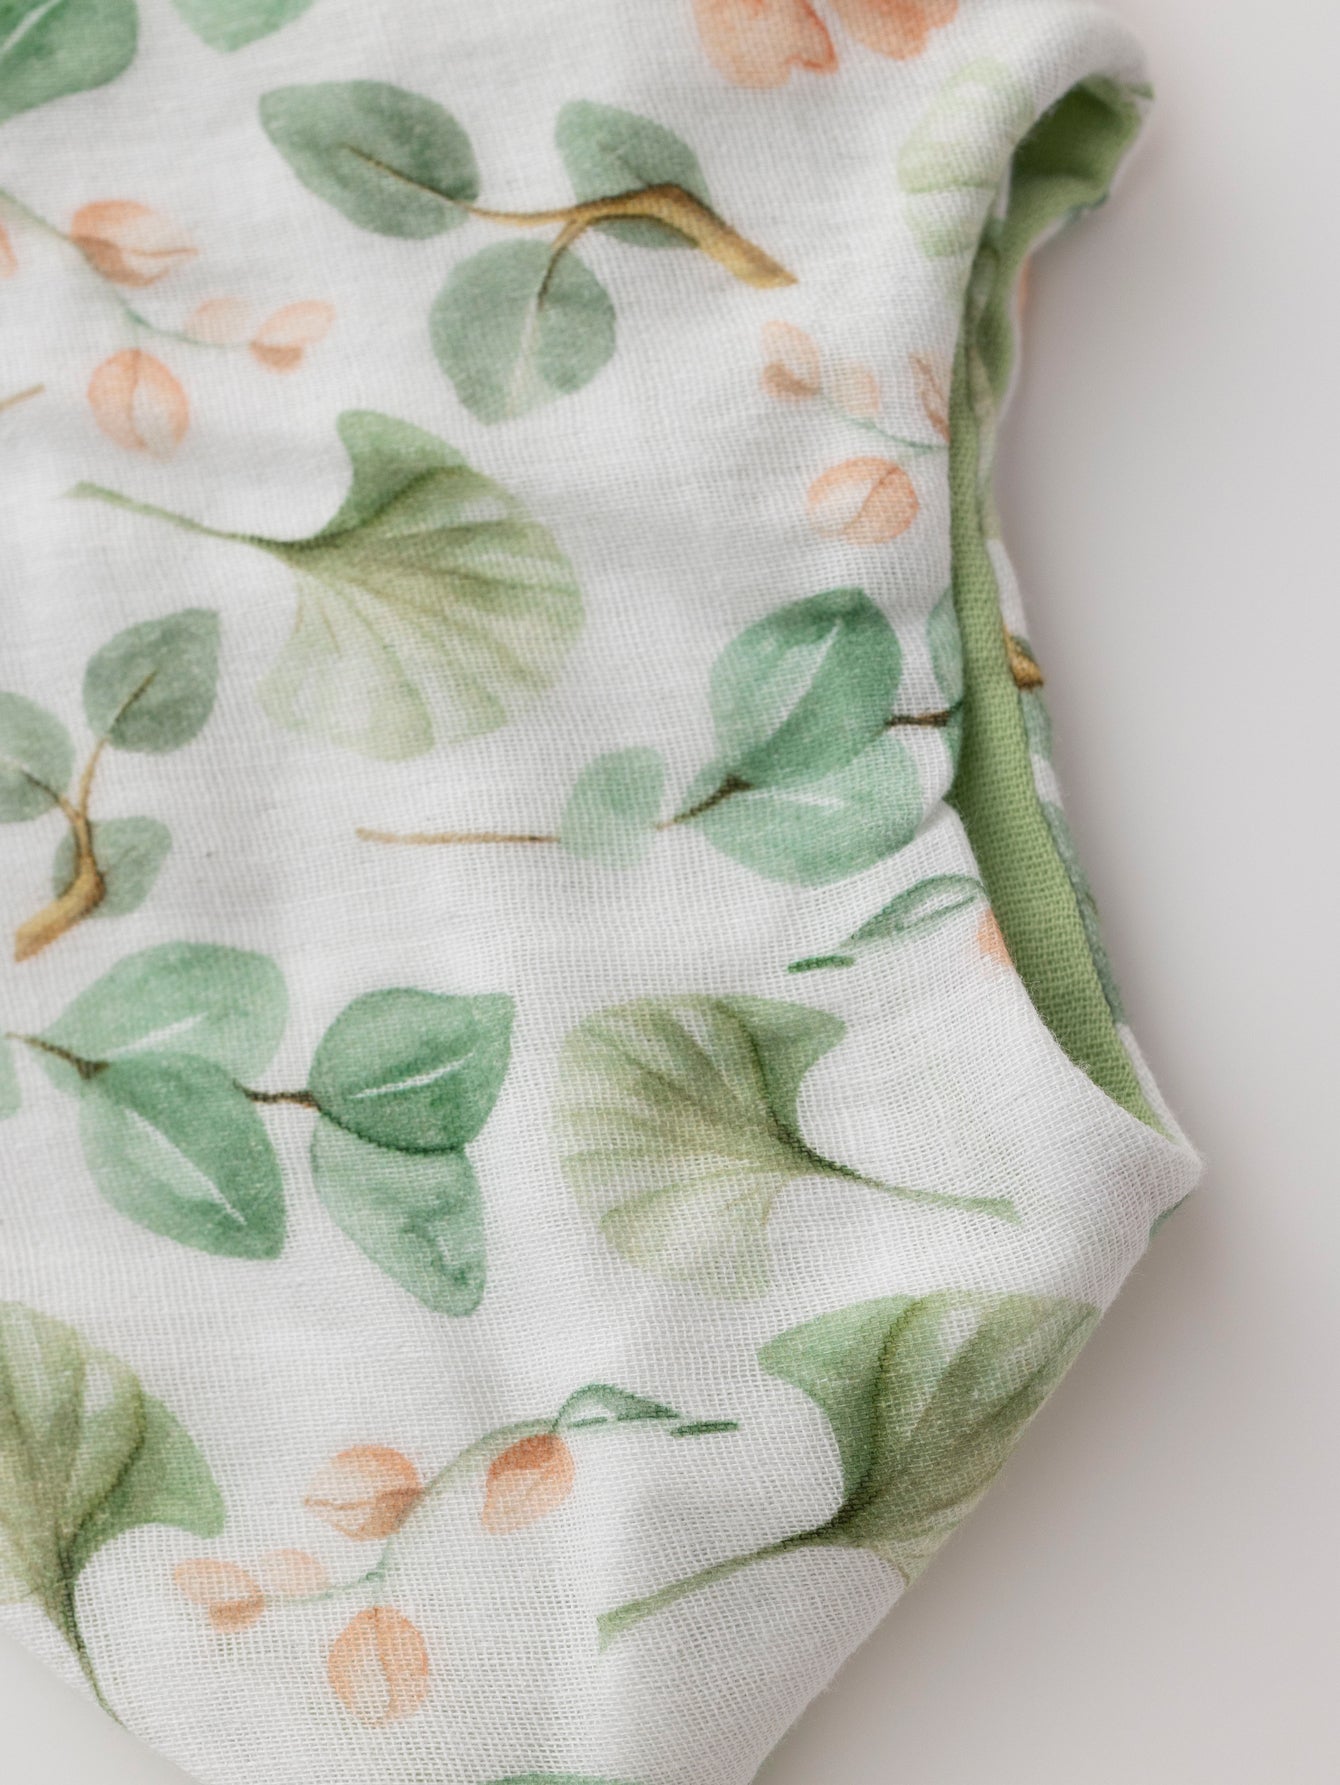 Muslin saliva towel + headband, the first choice for newborn gifts (green leaves)